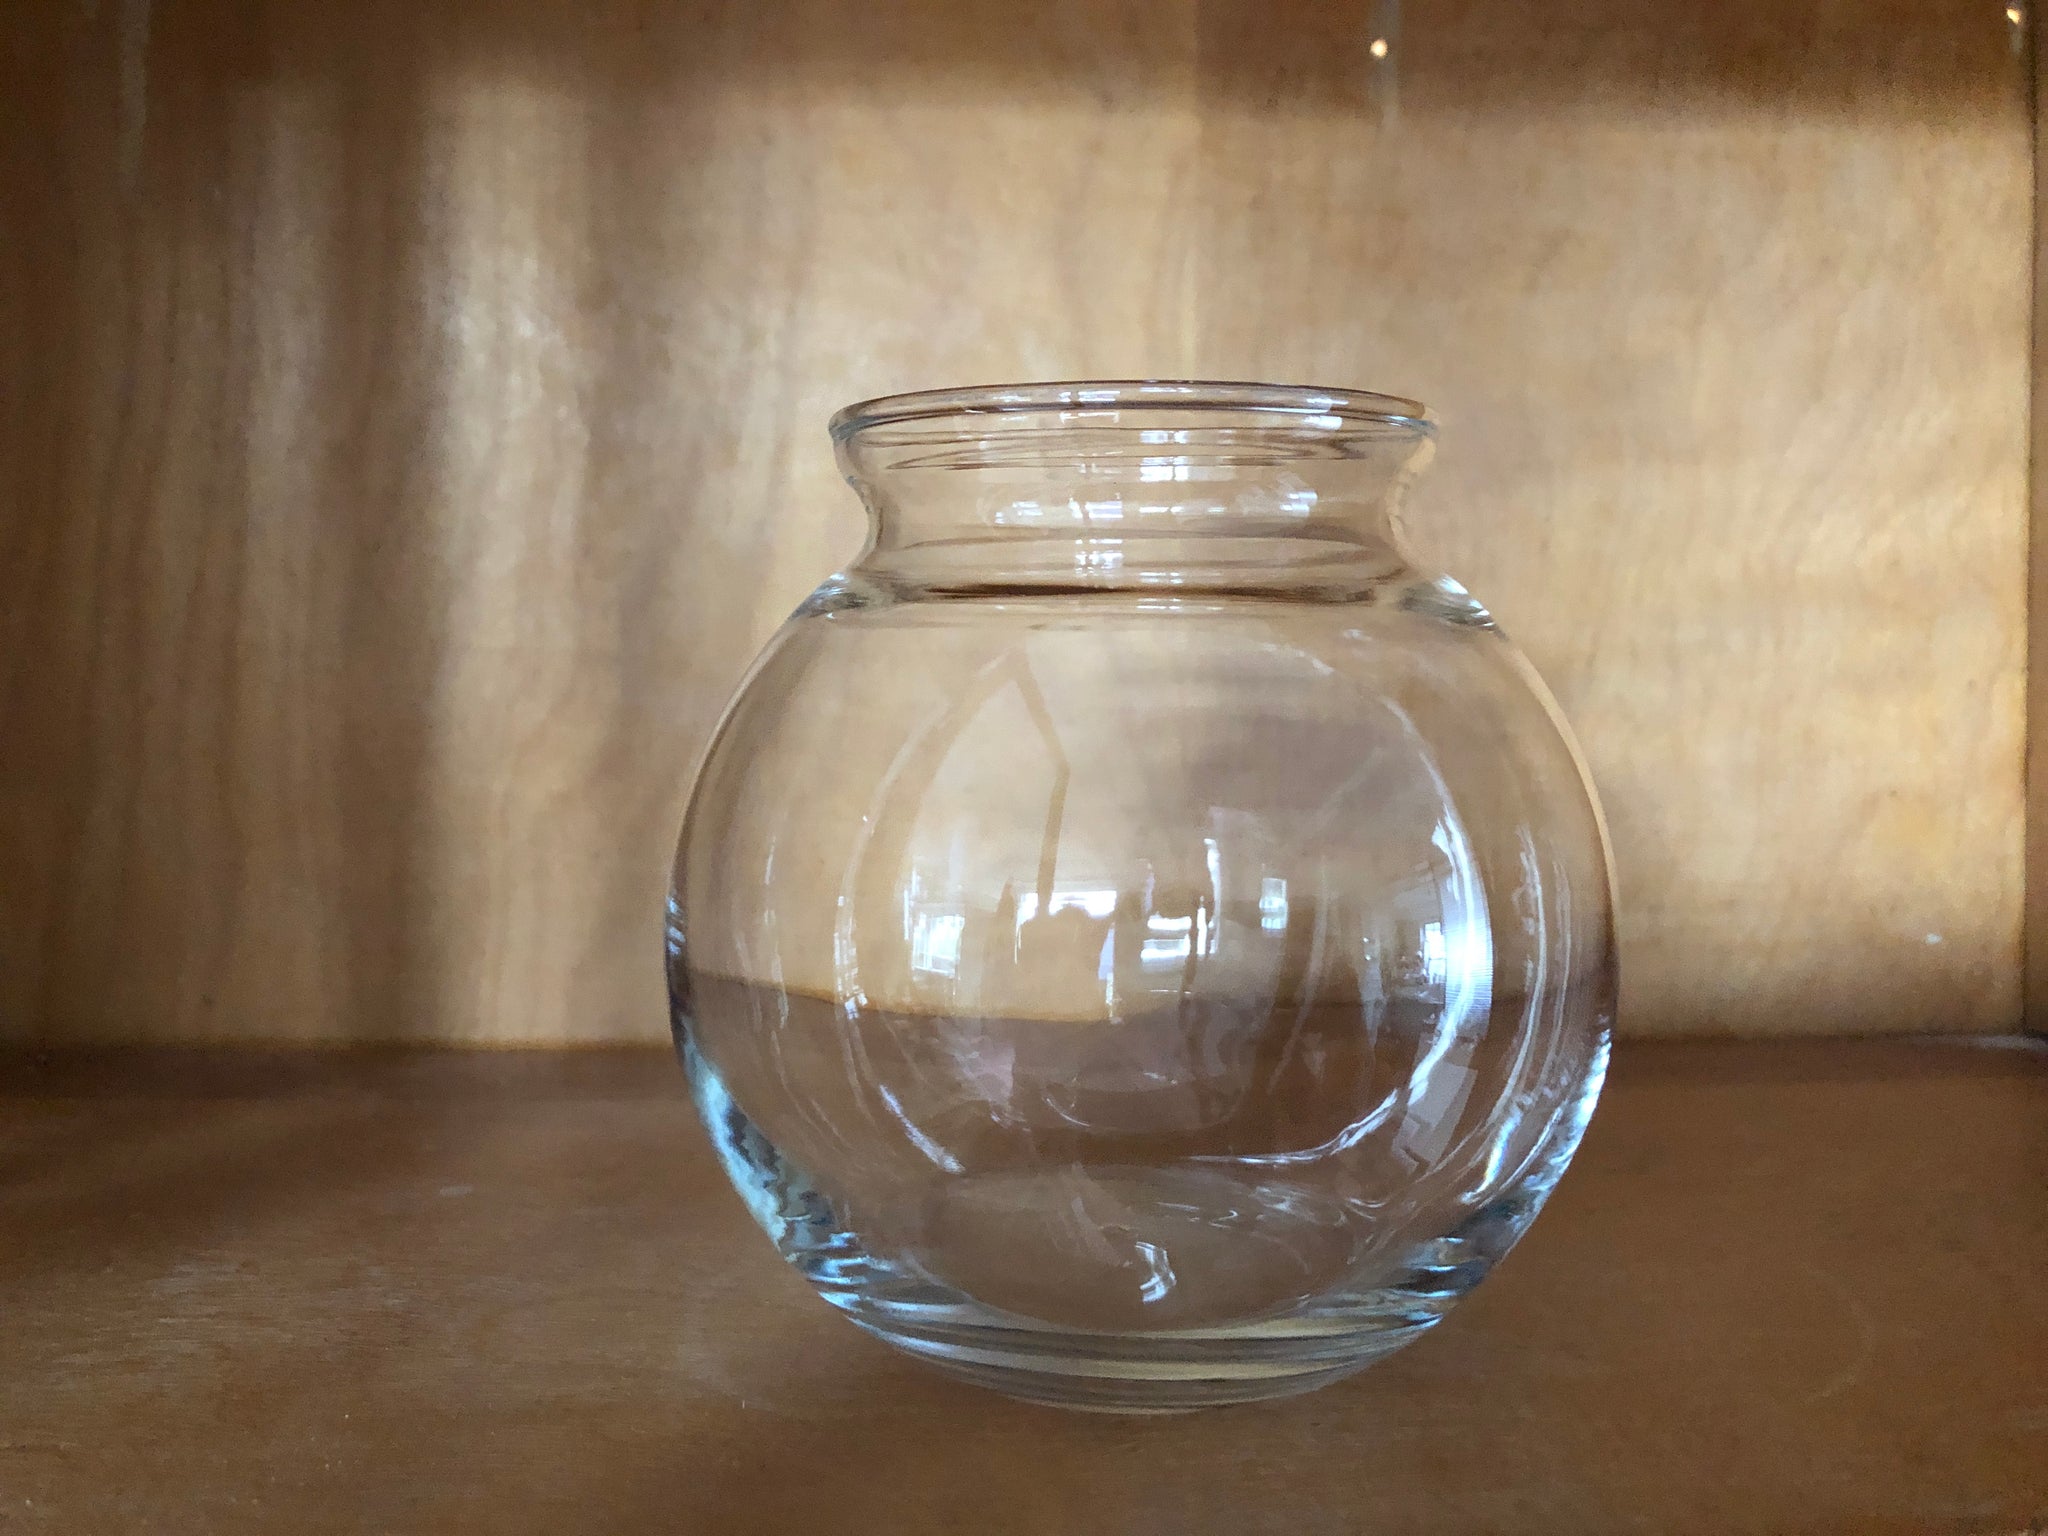 Clear Classic Bud Ball Vase